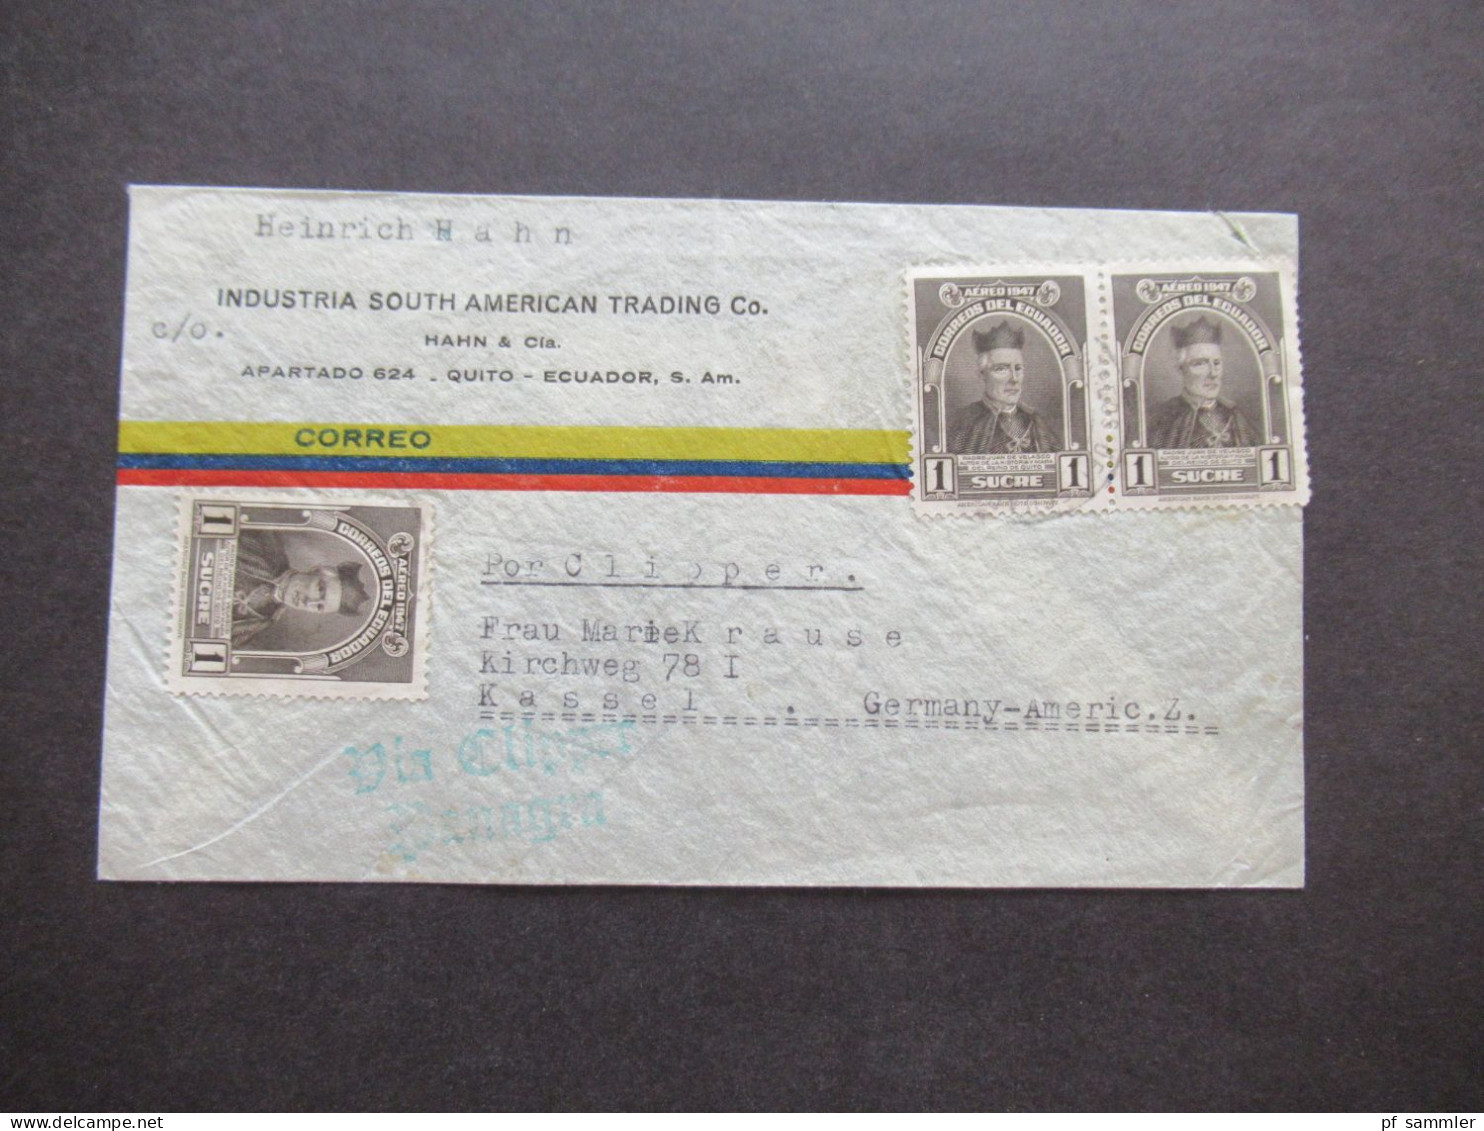 Ecuador Um 1940 Überseebrief Quito - Kassel Mit 2x Grüner Stempel Via Clipper (Banagra??) - Ecuador